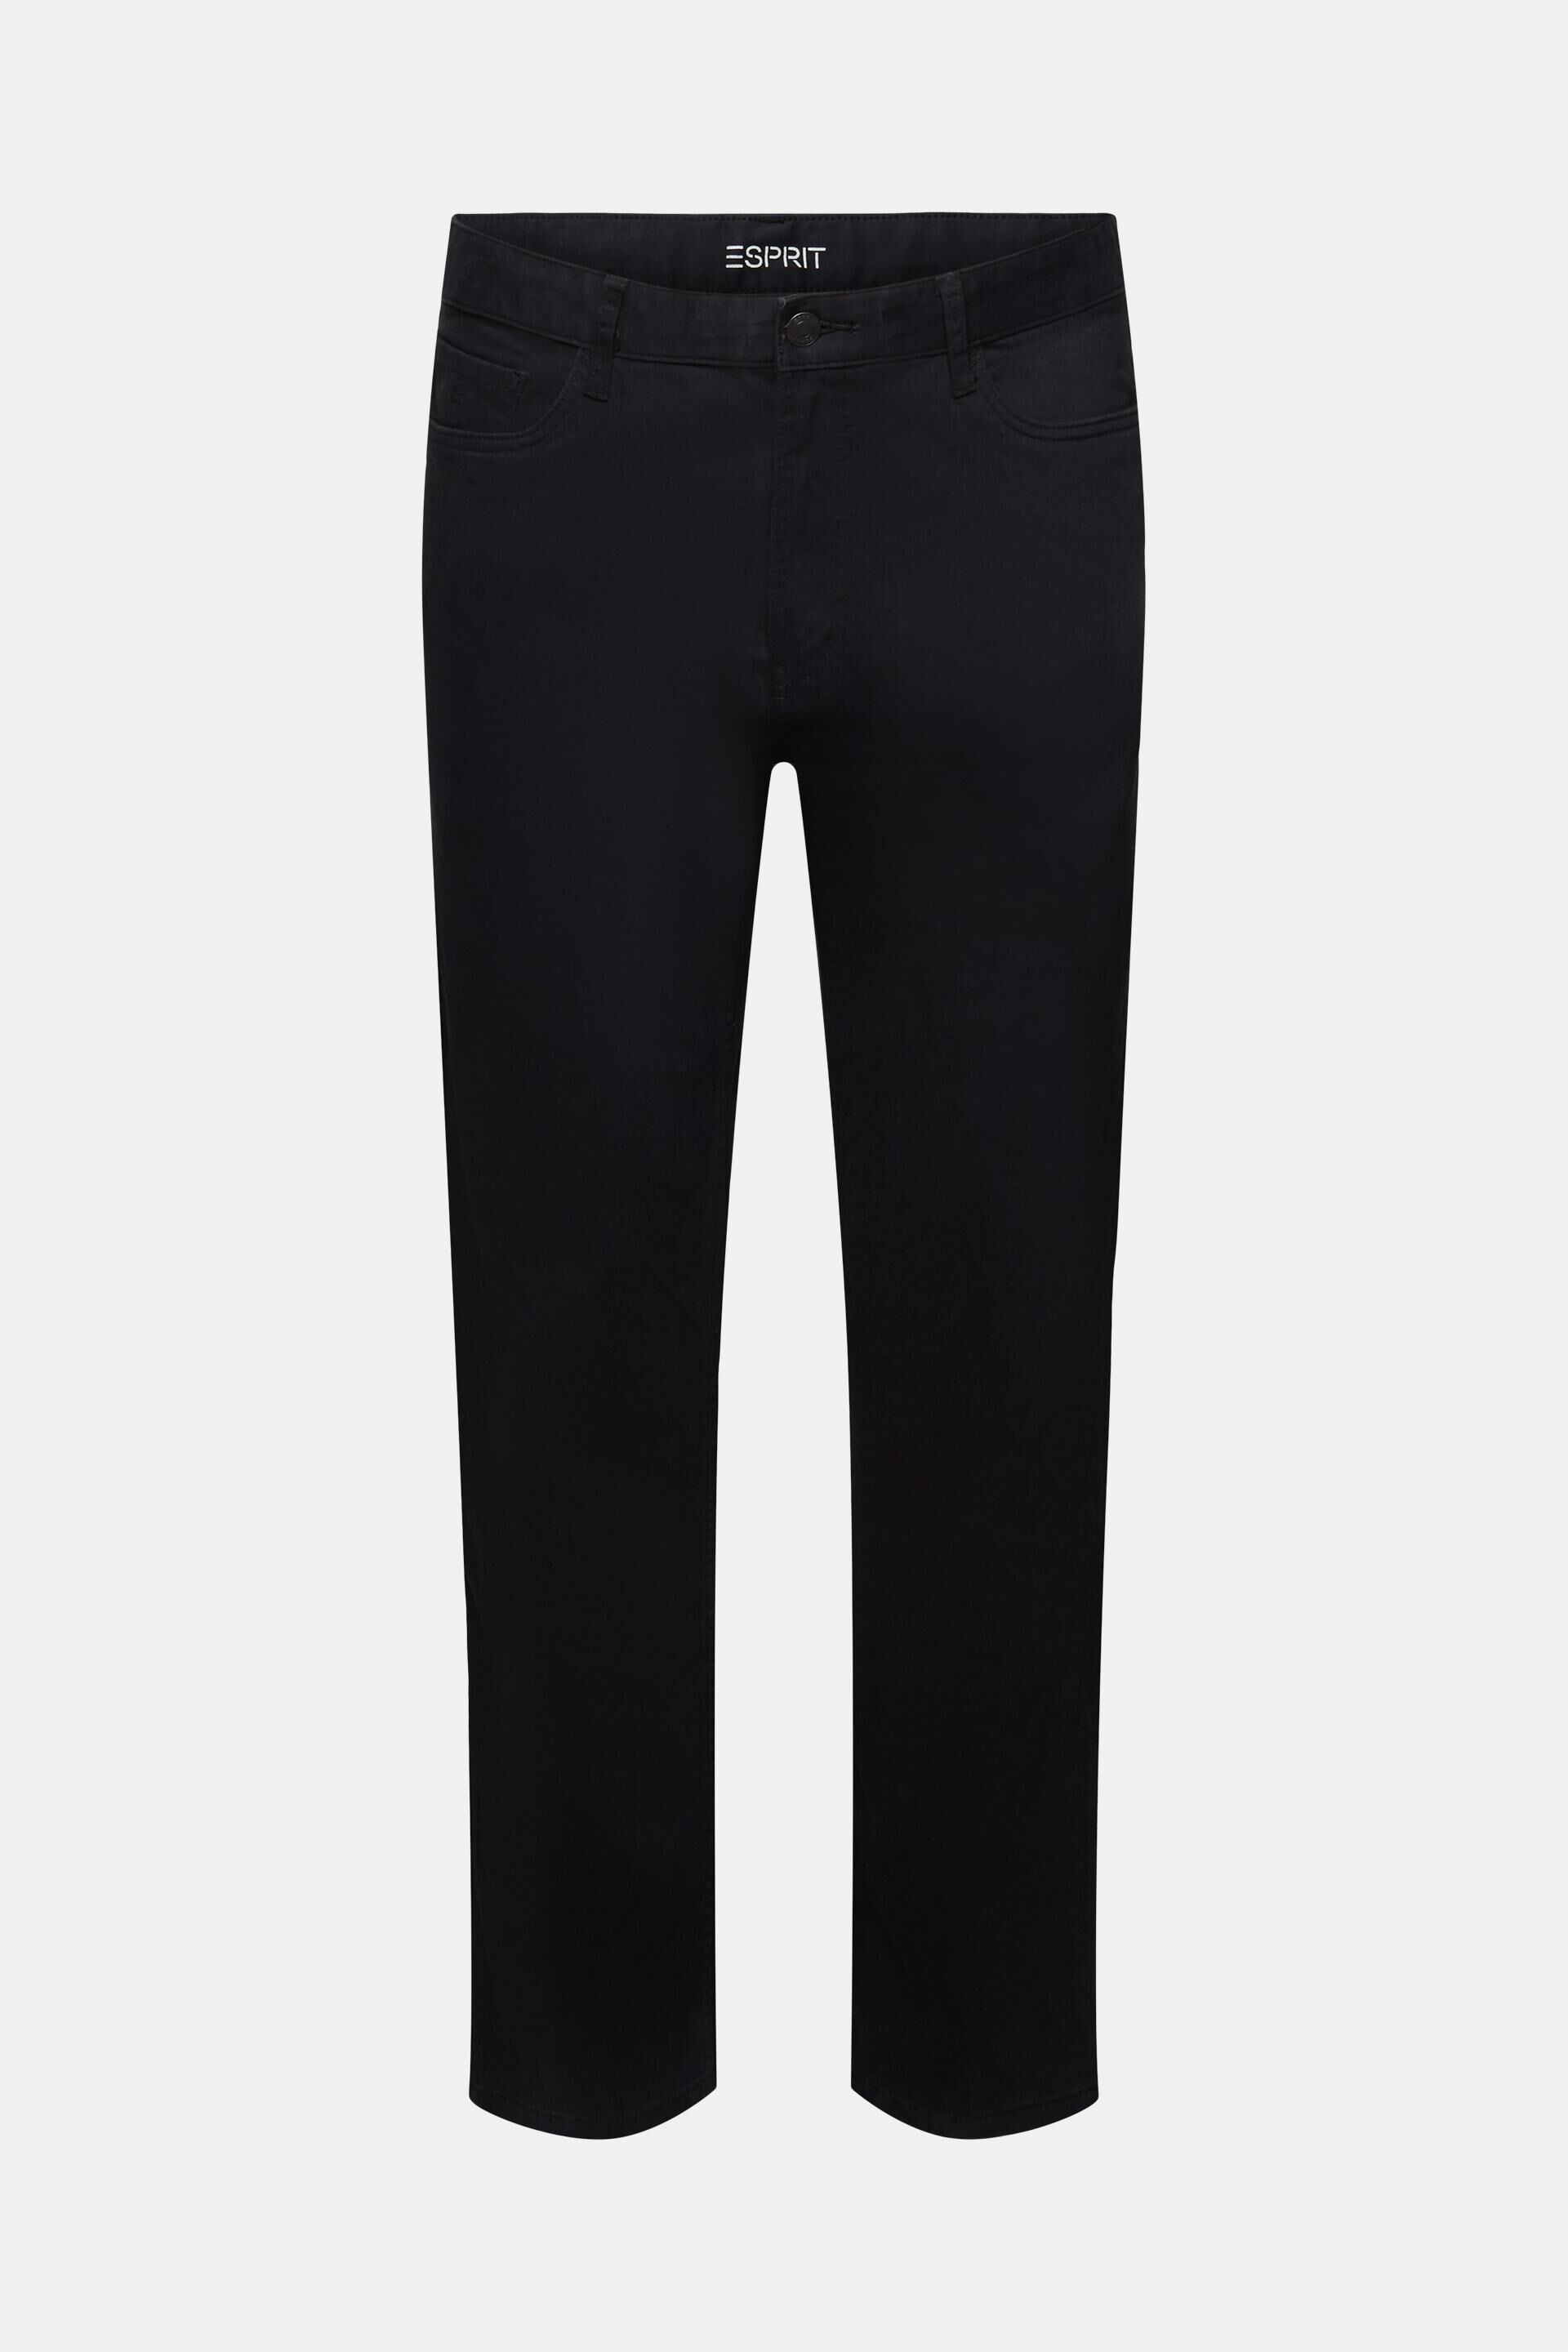 Classic Straight Pants at our online shop - ESPRIT